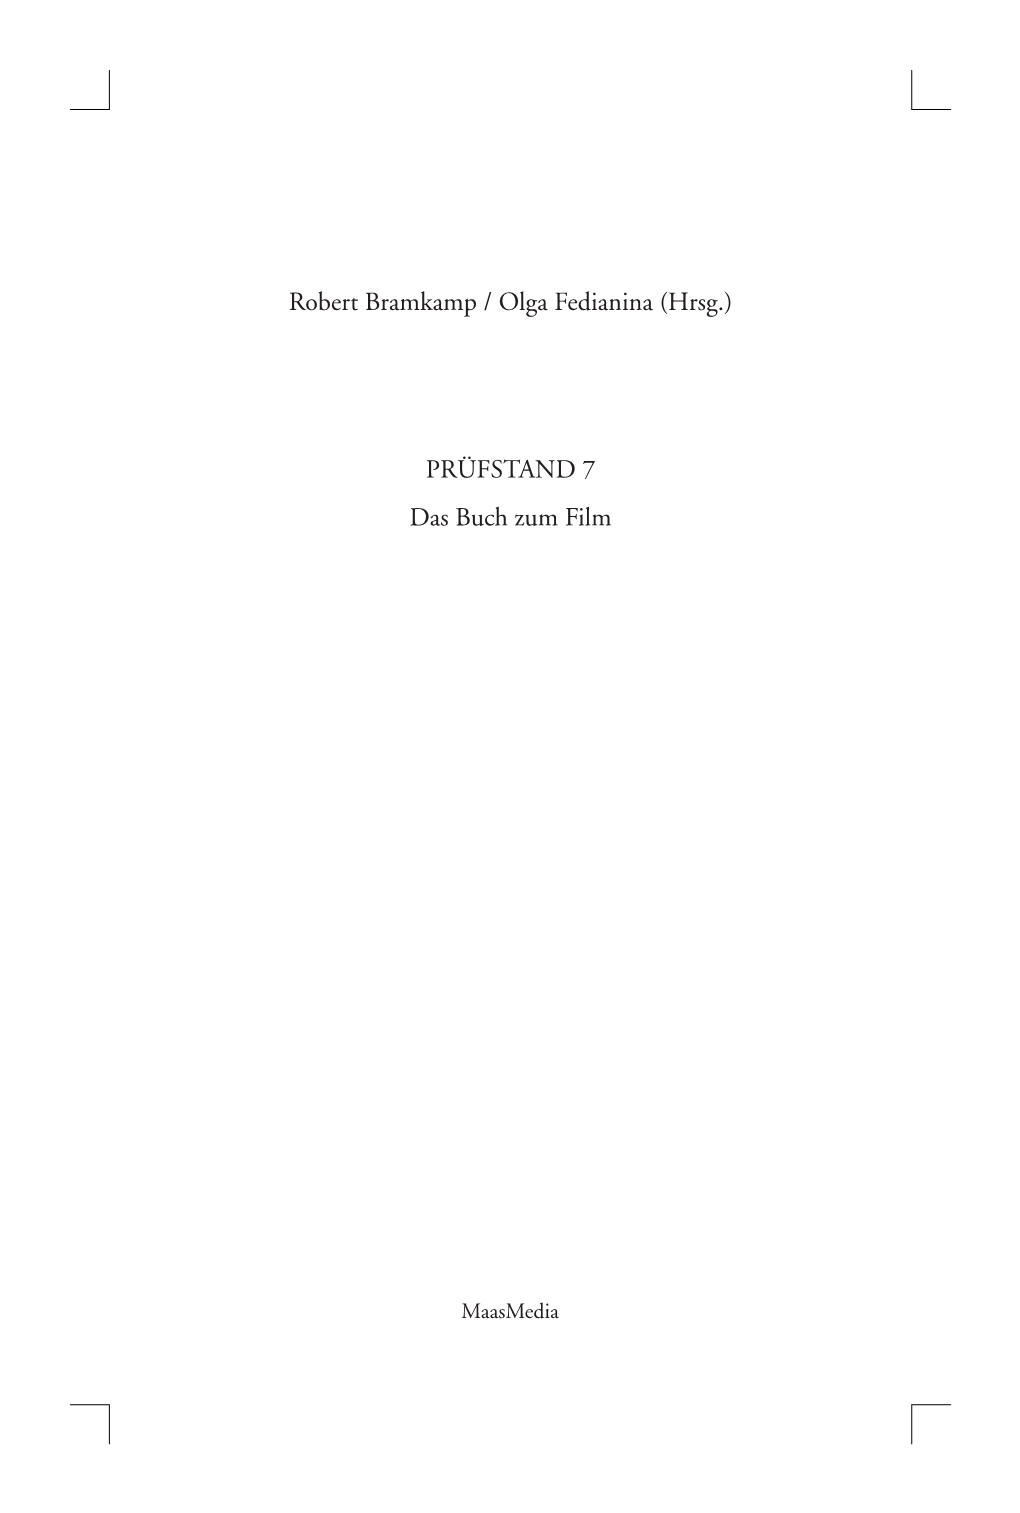 Robert Bramkamp / Olga Fedianina (Hrsg.) PRÜFSTAND 7 Das Buch